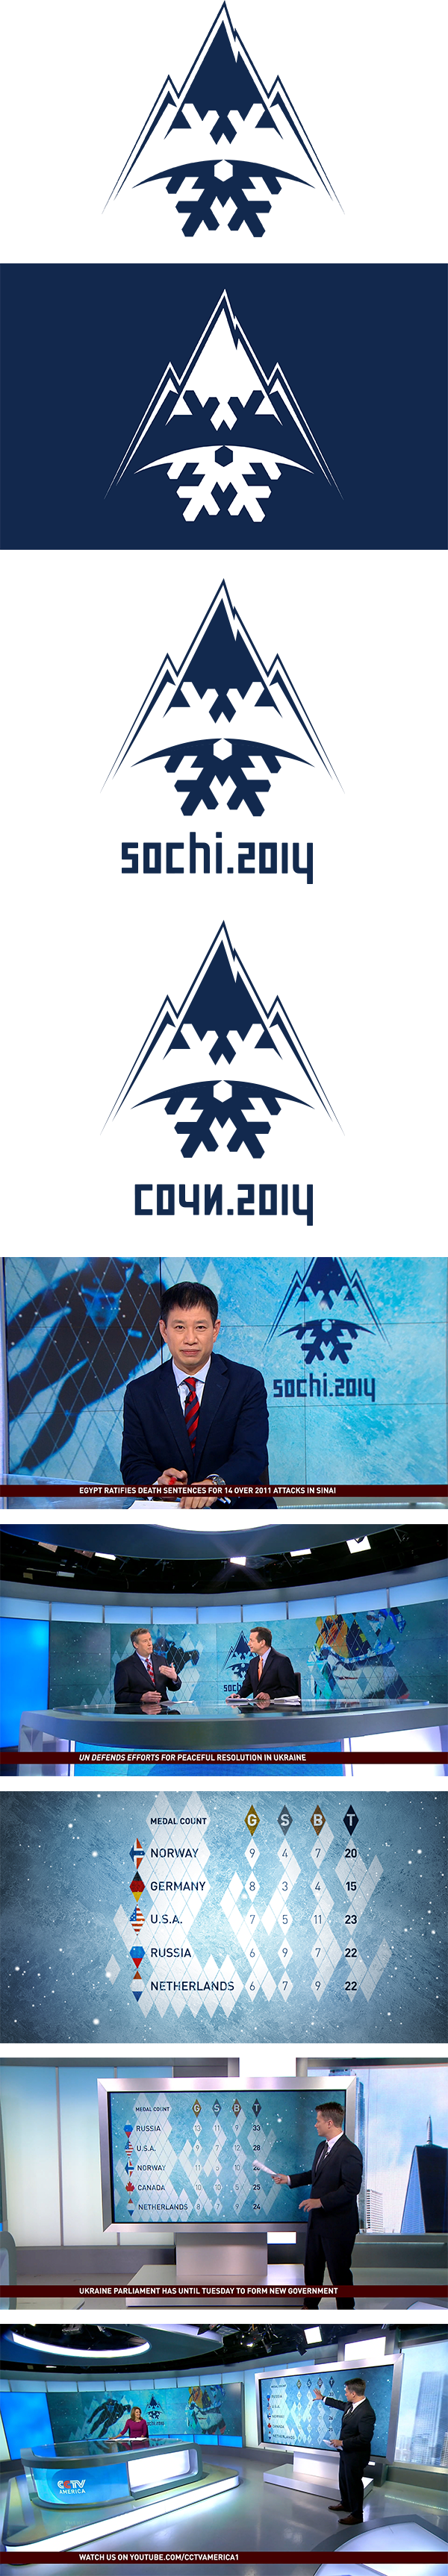 television broadcast Olympics sochi sport CCTV America winter olympics